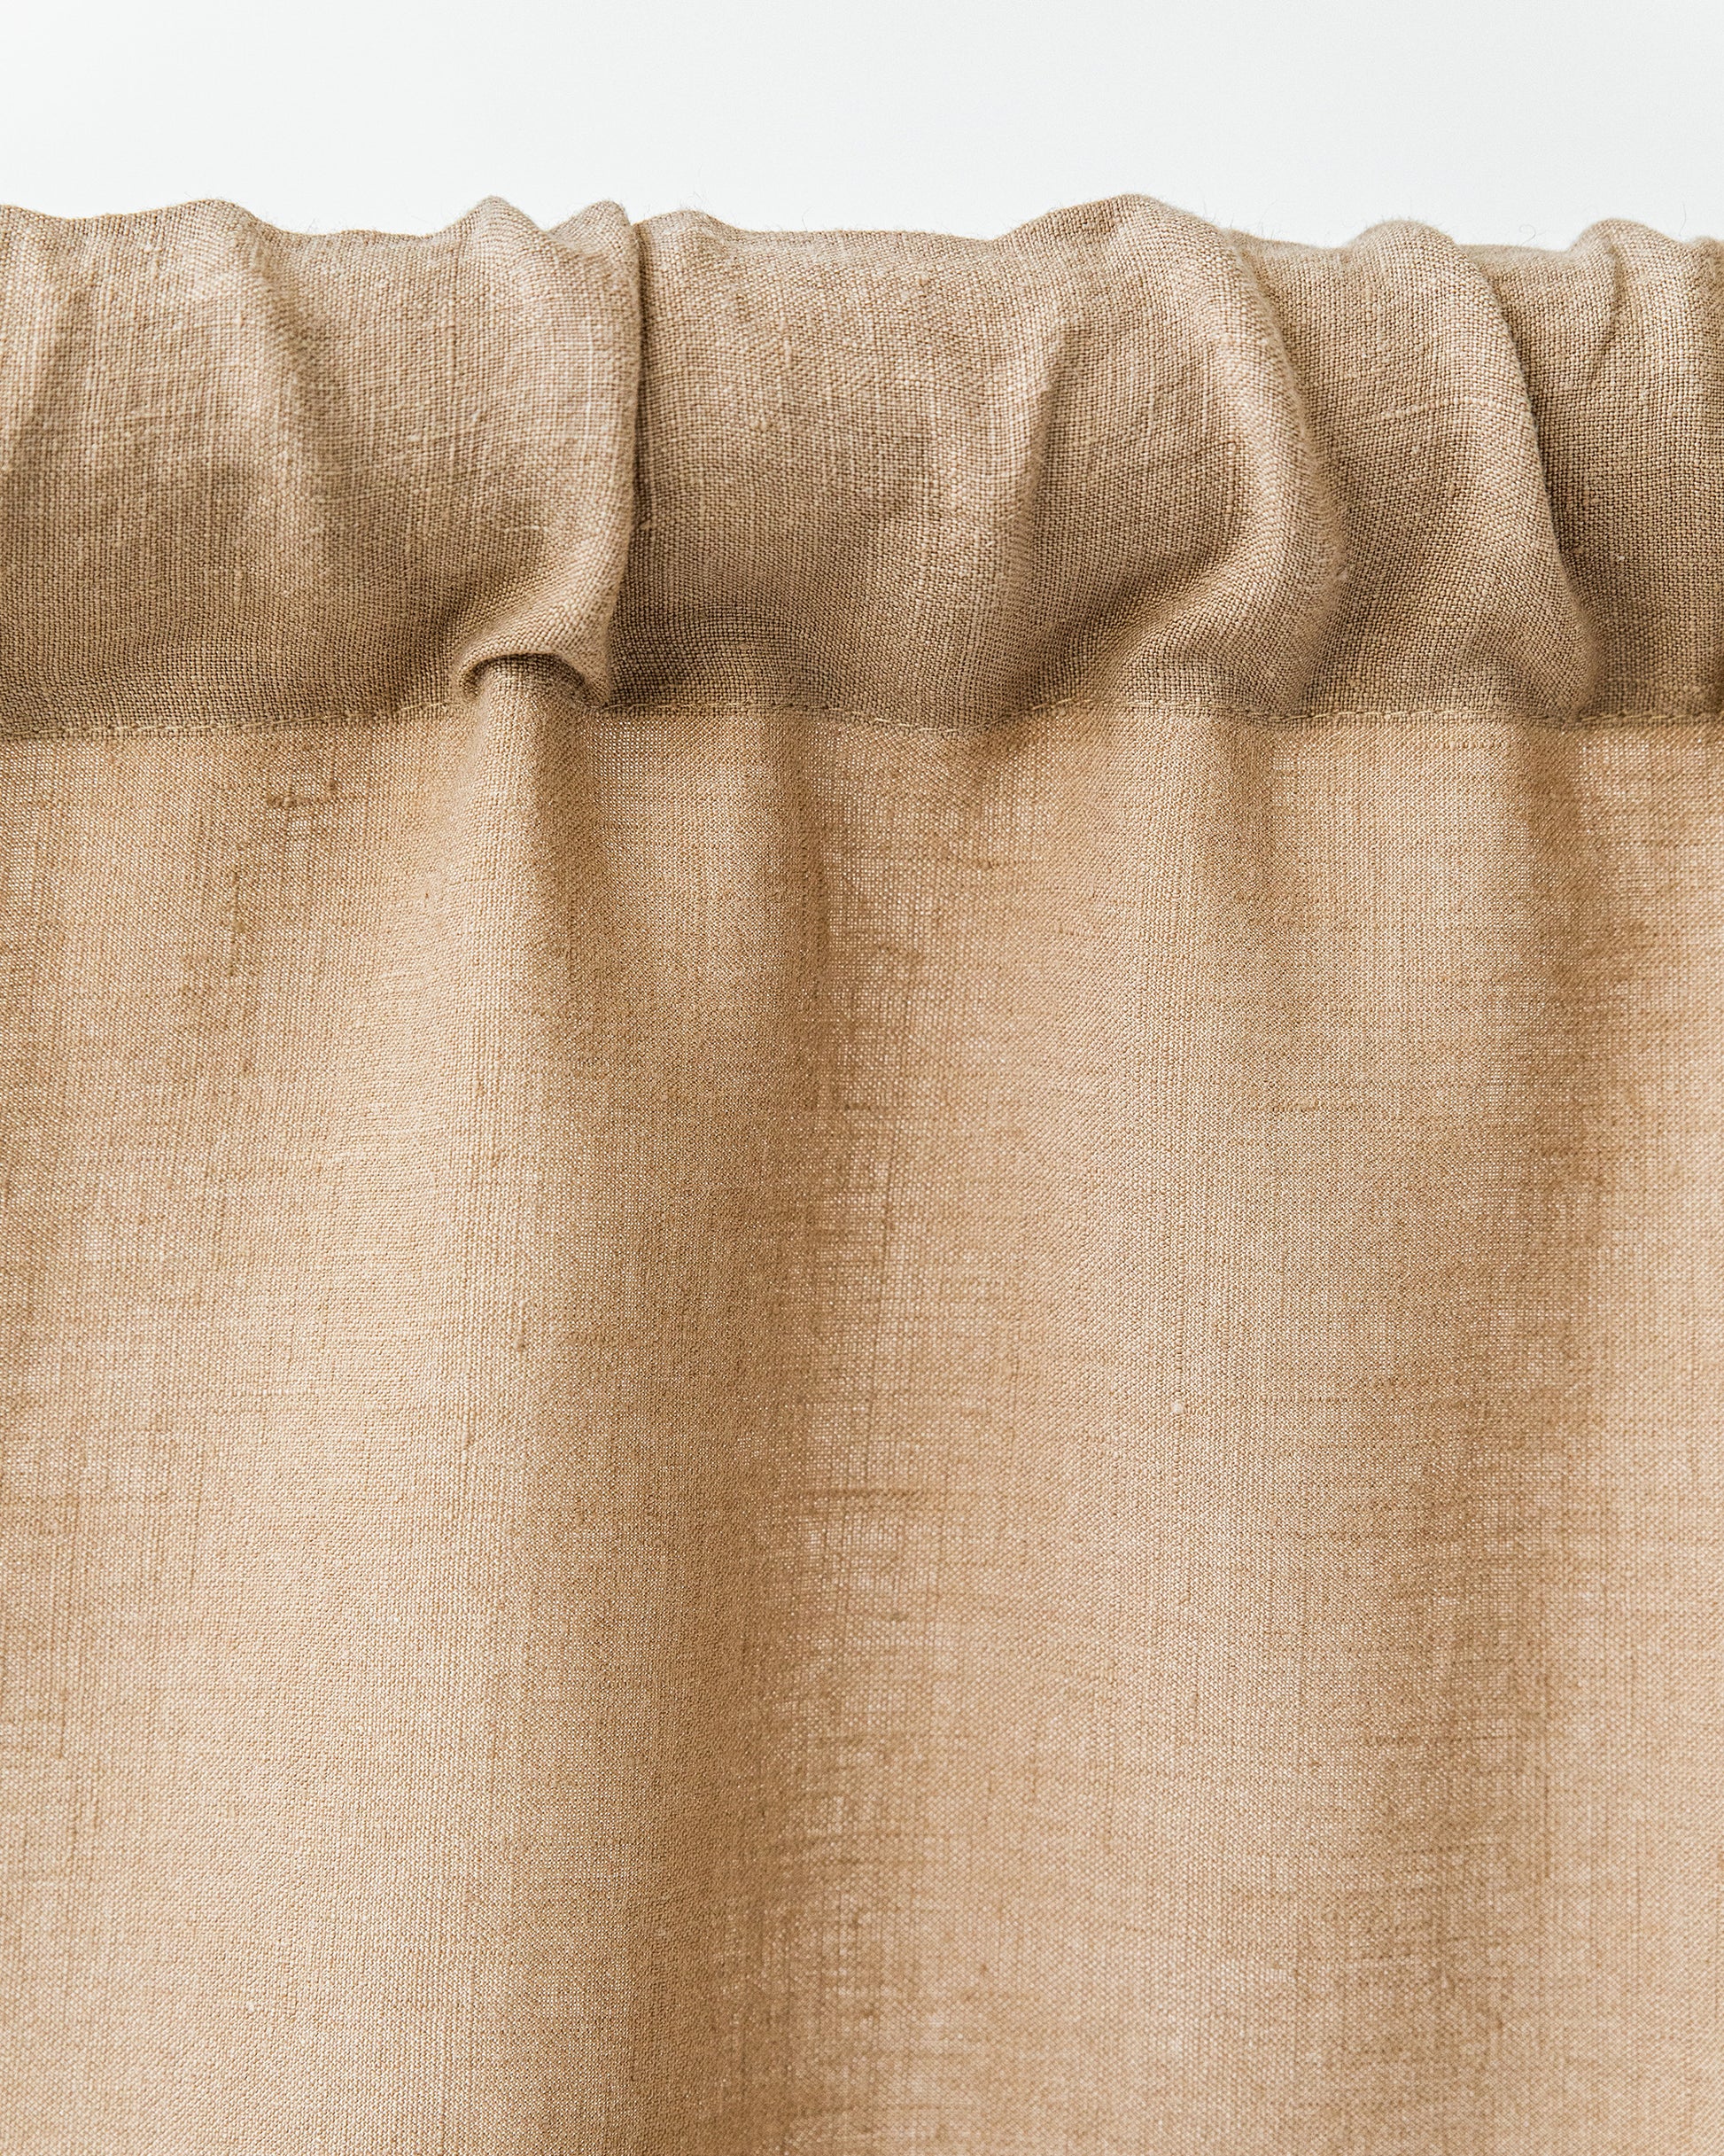 Rod pocket linen curtain panel (1 pcs) in Latte - MagicLinen